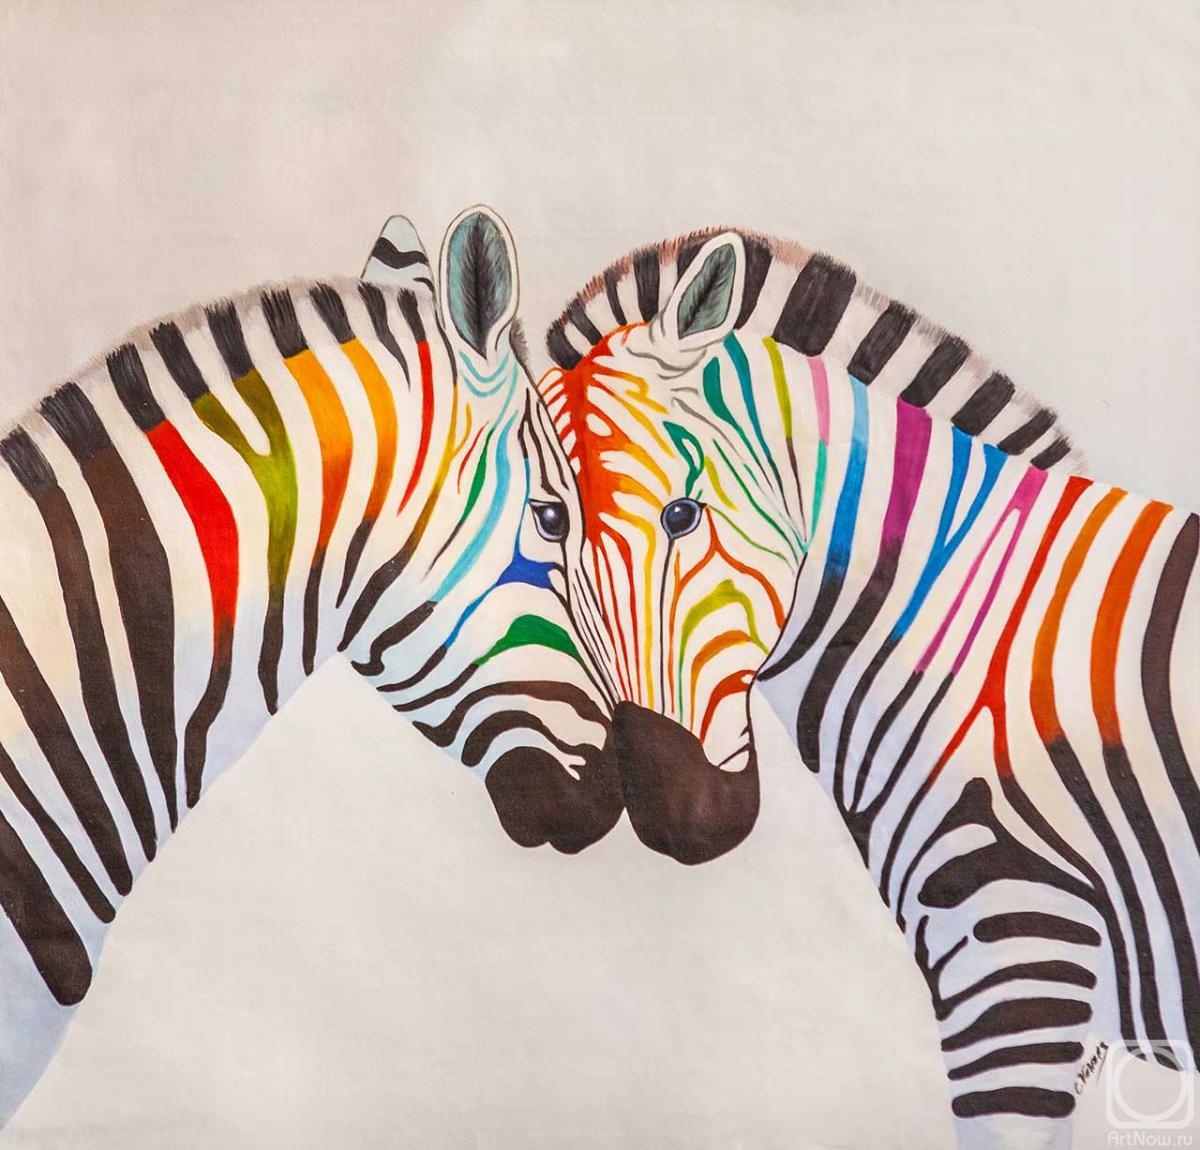 Vevers Christina. Zebras, colorful as a rainbow